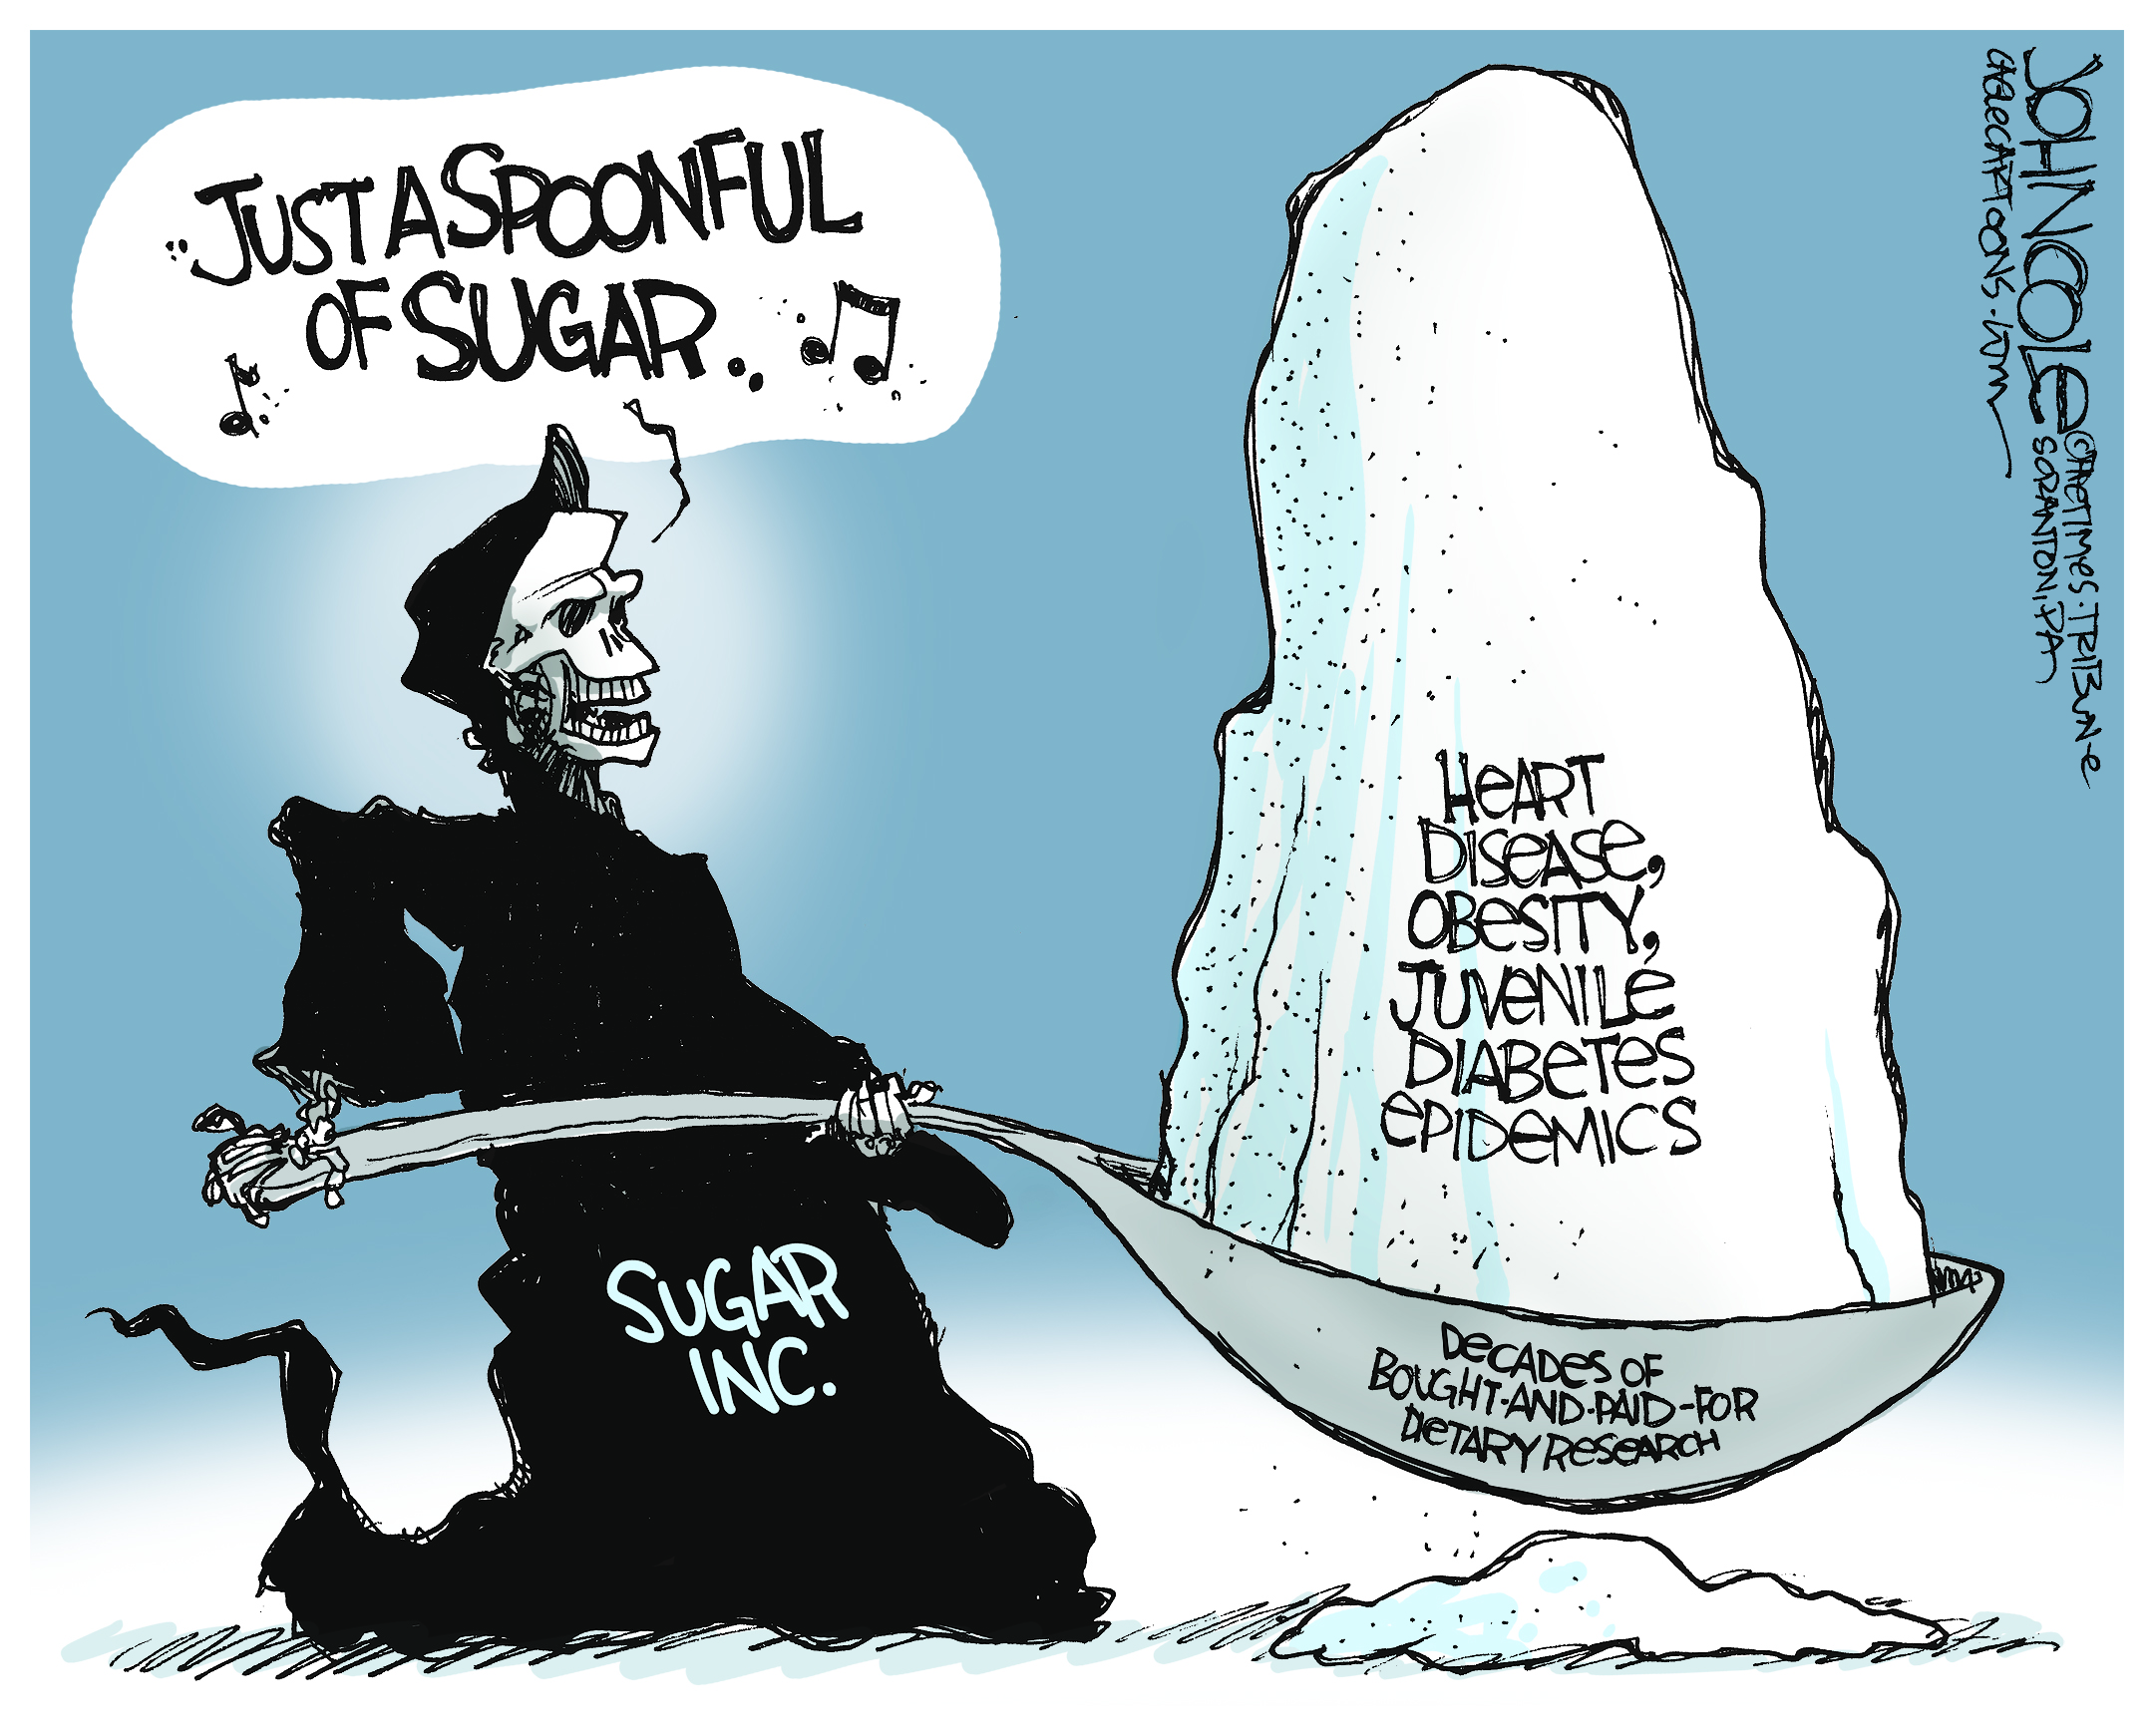 Editorial cartoon . Sugar lobby death science studies